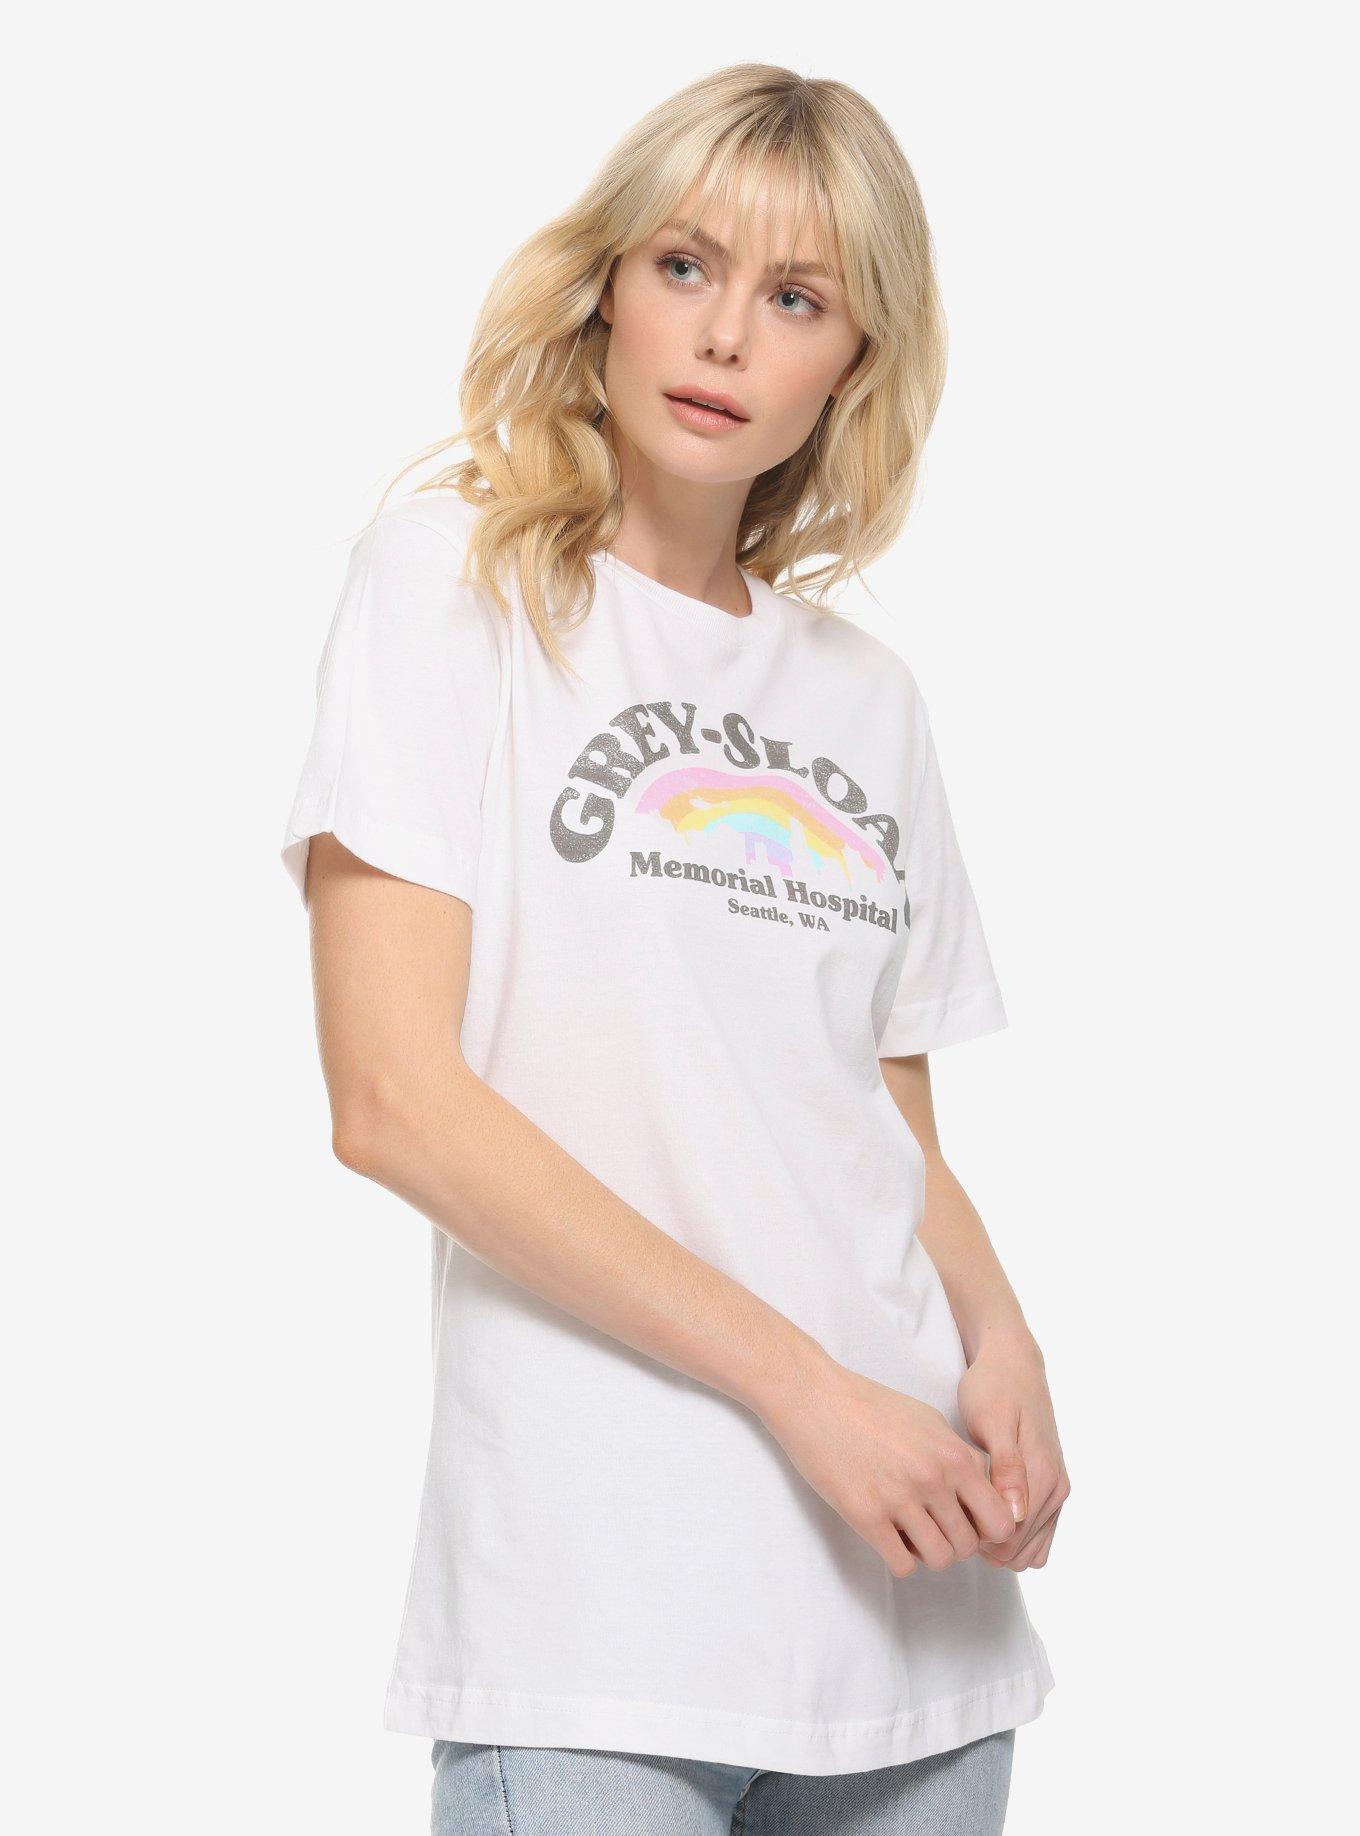 Grey's Anatomy Grey-Sloan Rainbow T-Shirt - BoxLunch Exclusive, WHITE, hi-res